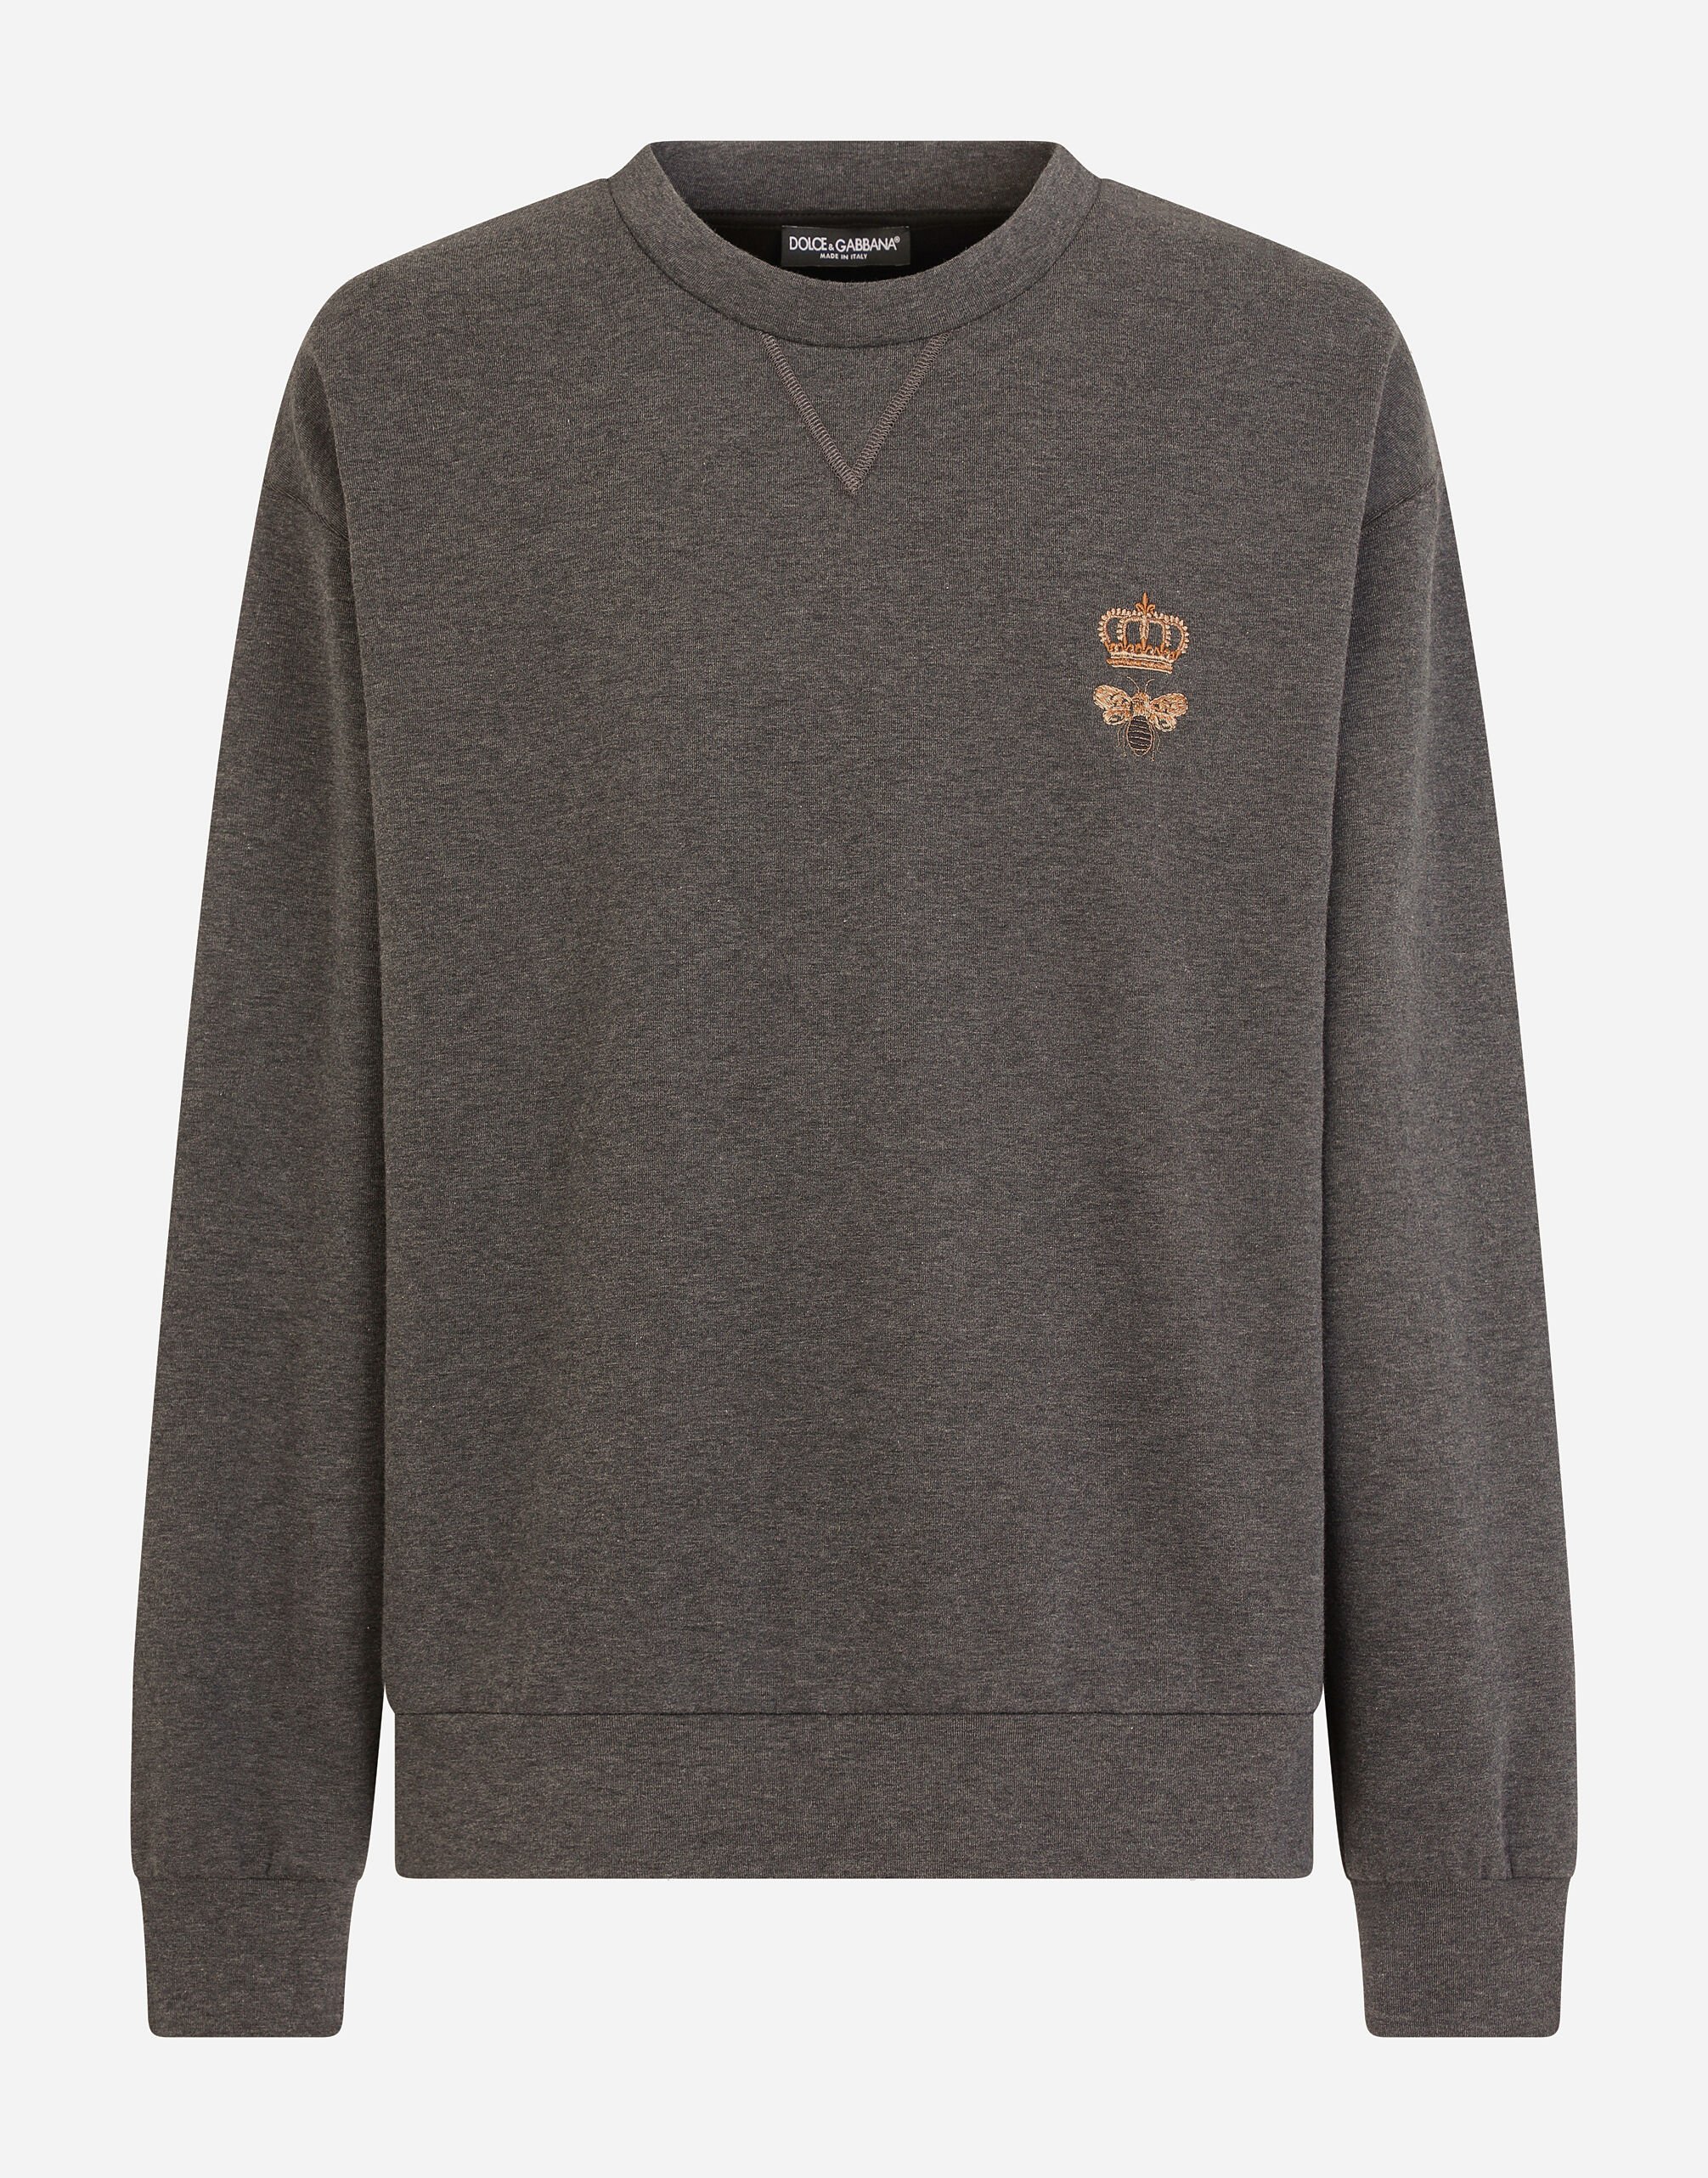 Dolce & Gabbana Jersey sweatshirt with embroidery Print G9AQVTHI7X6